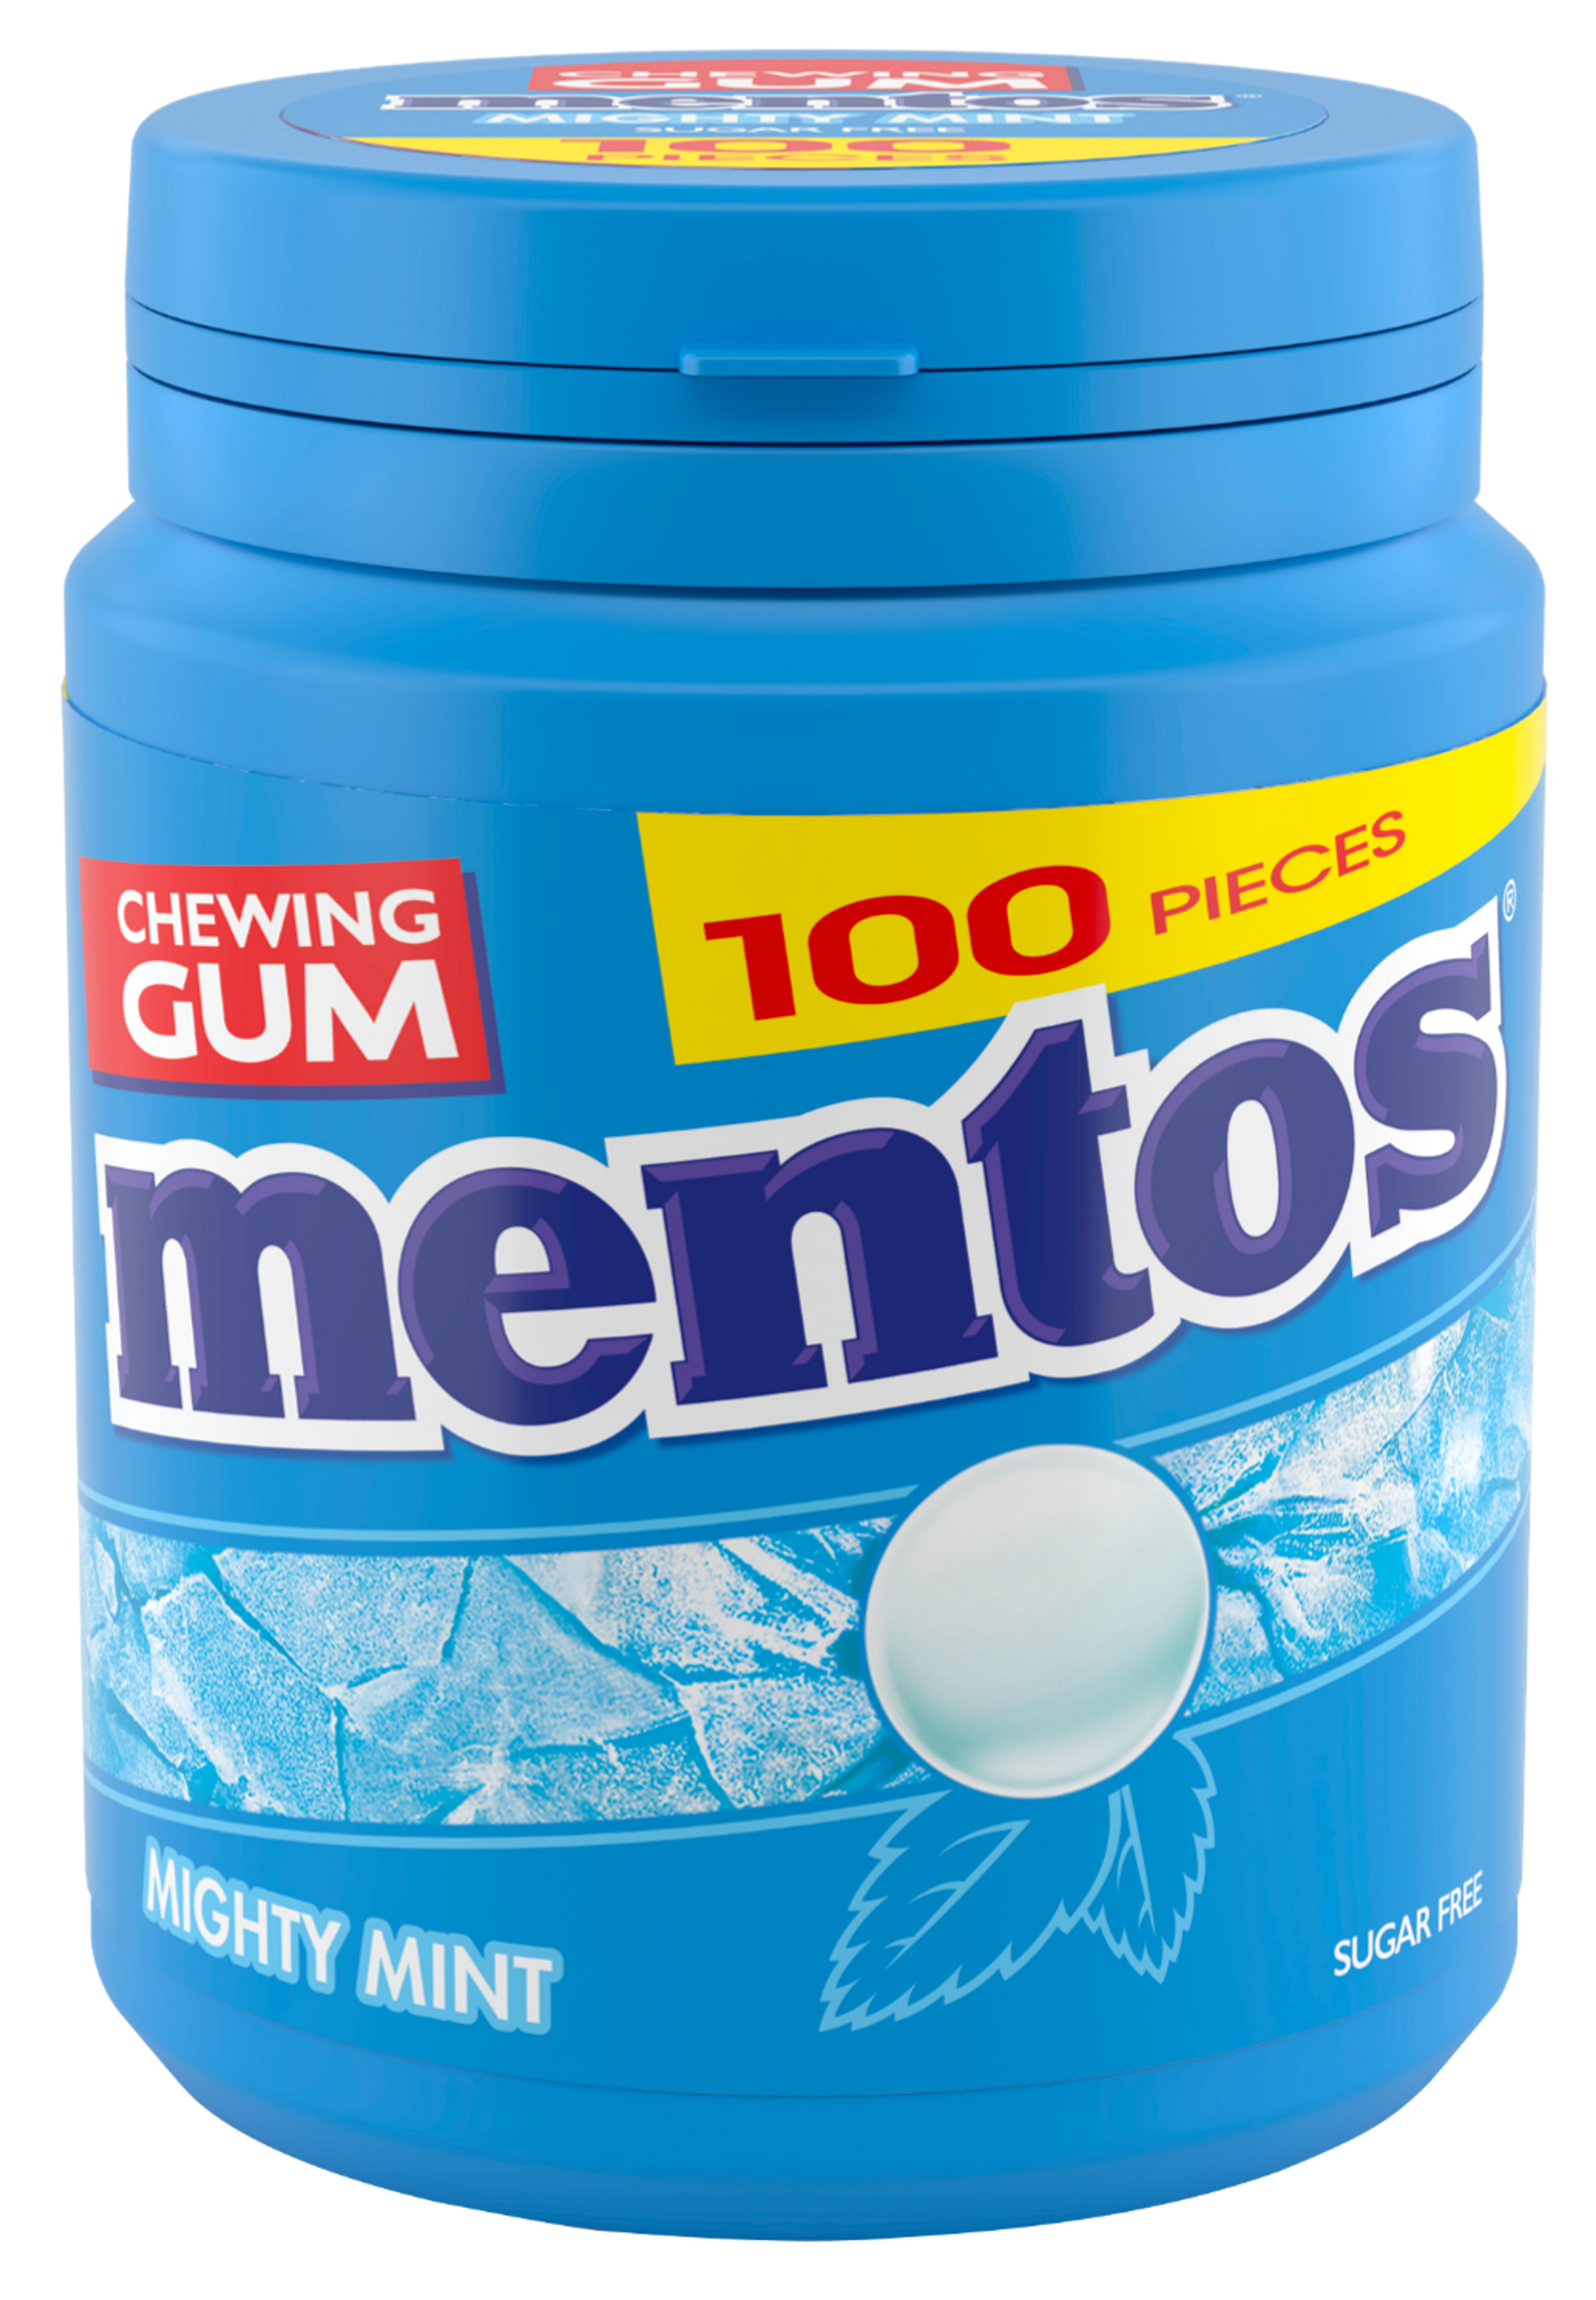 Mentos Gum Mighty Mint